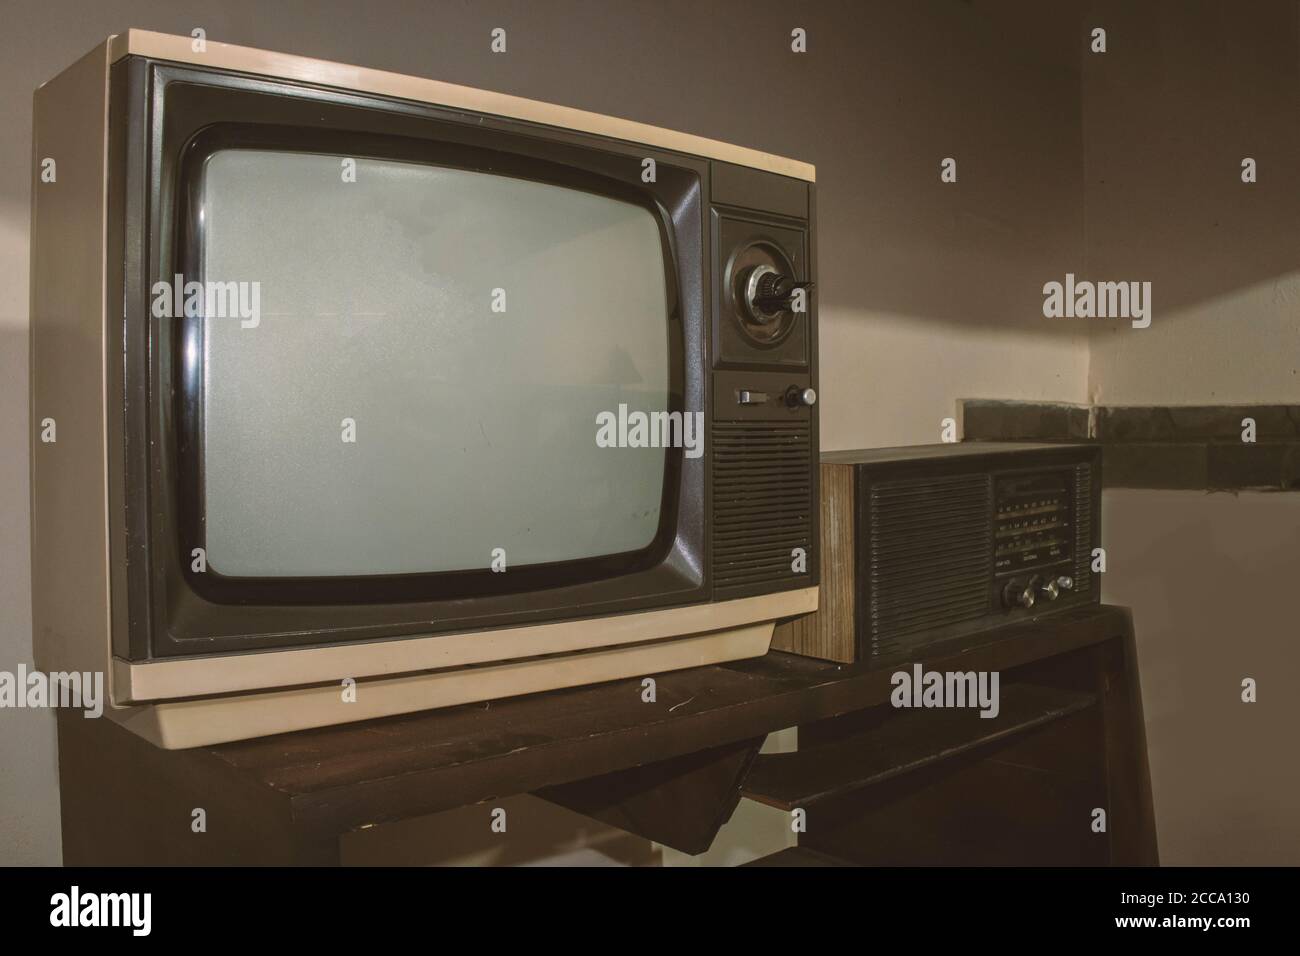 Old retro TV and Radio  concept image Stock Photo